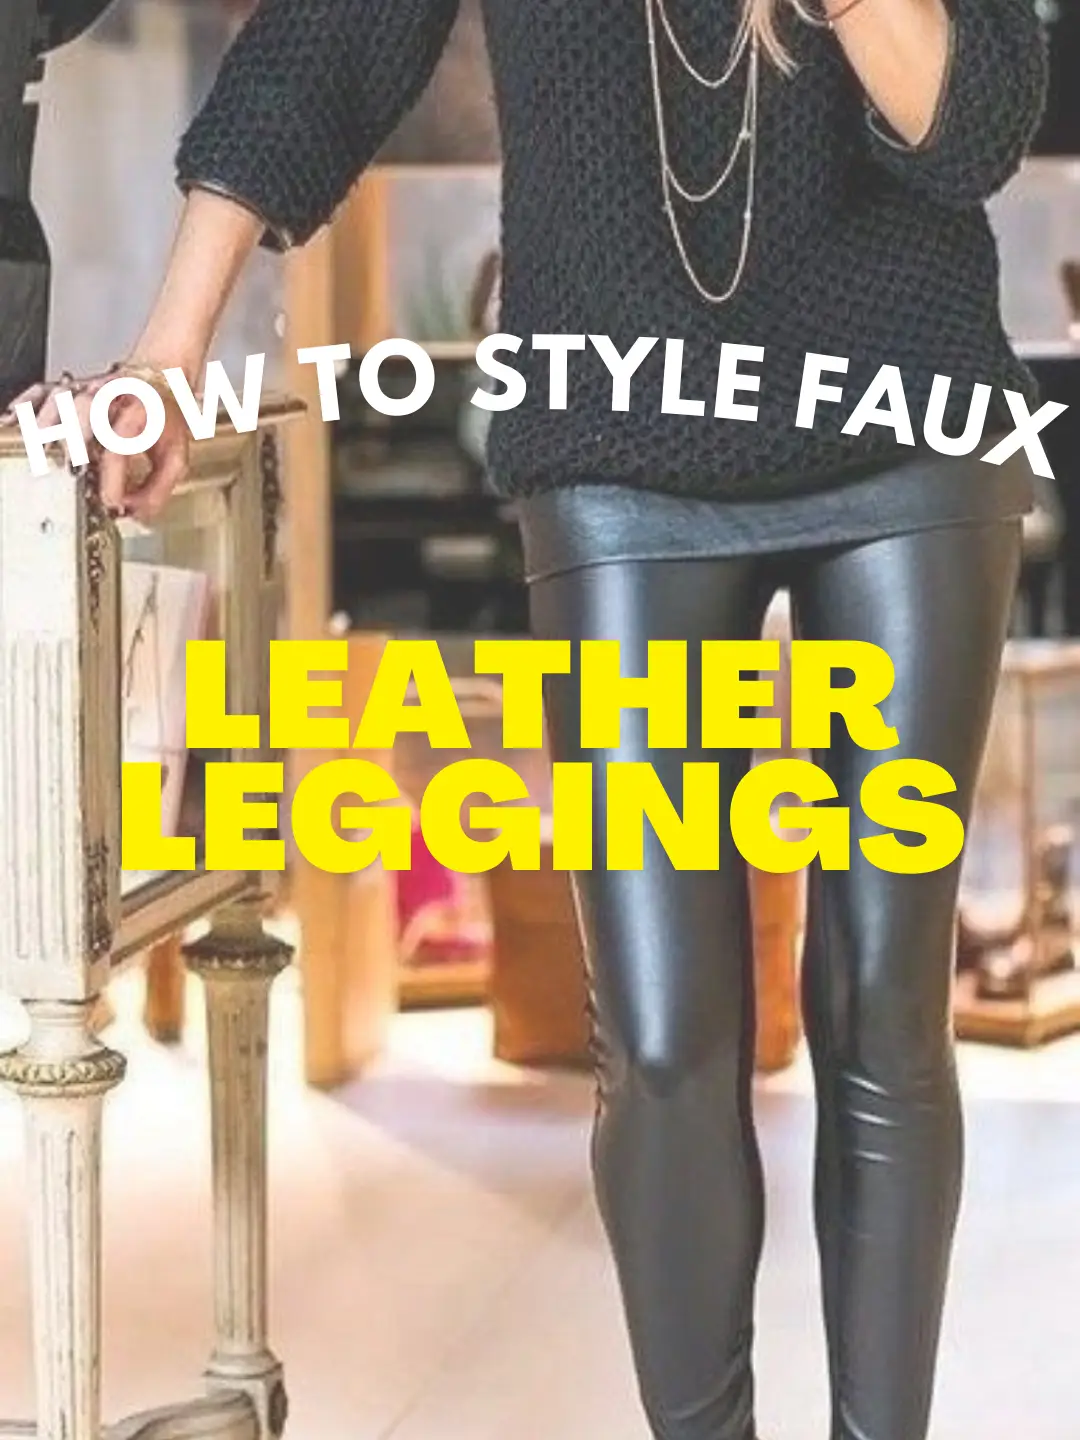 Lulu scuba dupe + spanx leather leggings dupe just dropped! Go